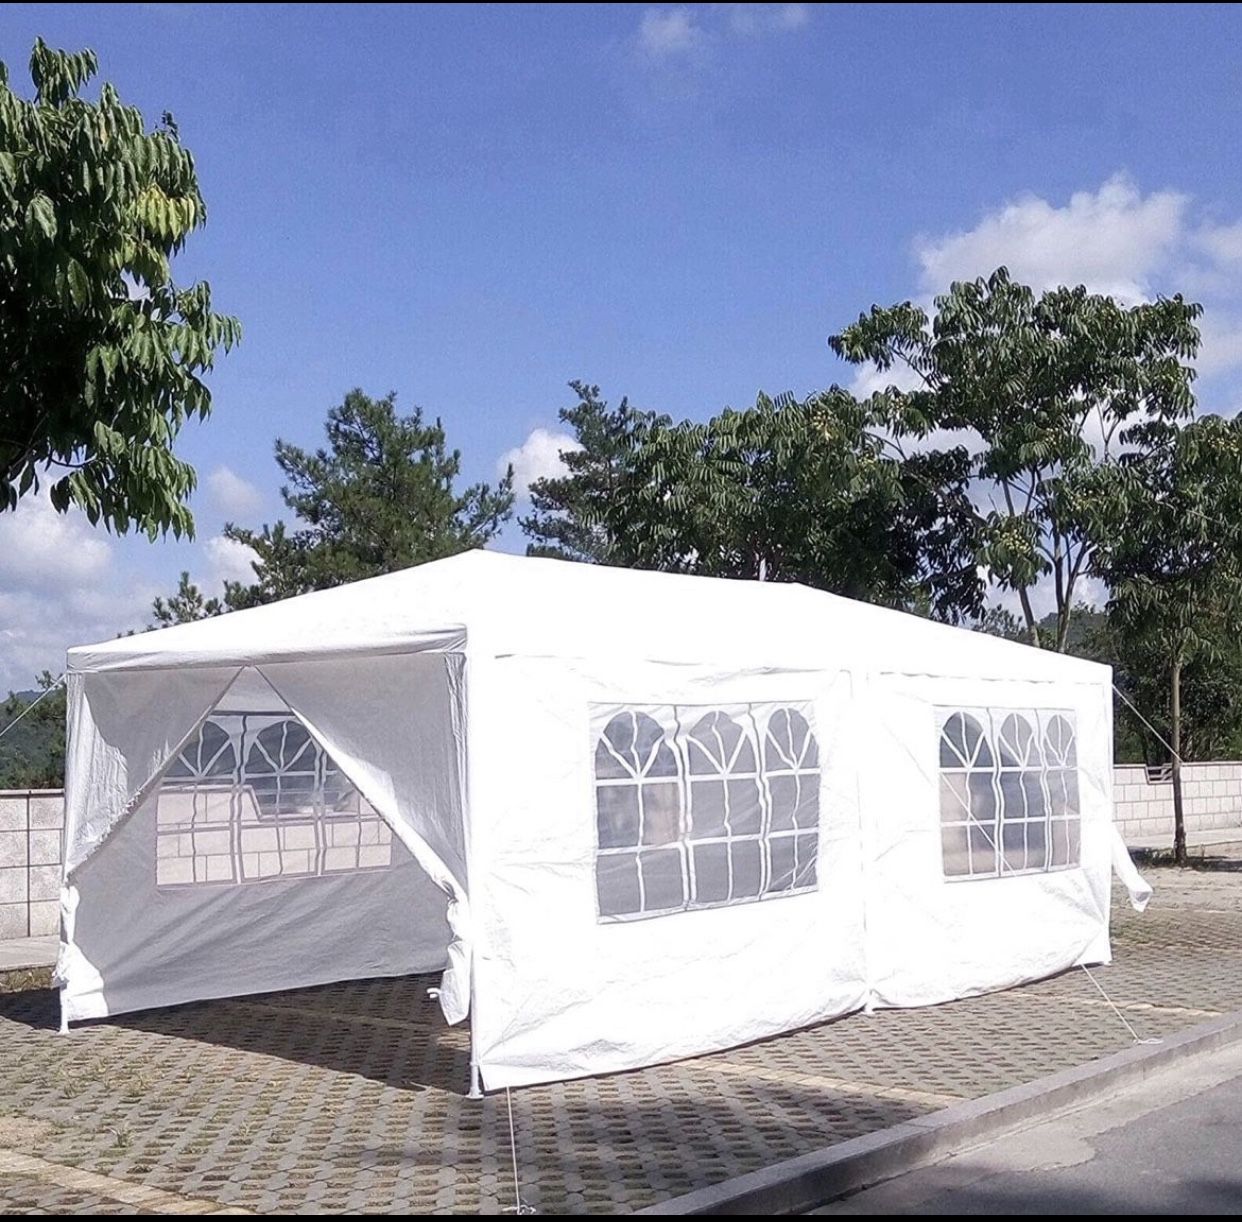 10 X 20 White Party Tent Gazebo Canopy w/ 6 Removable Sidewalls